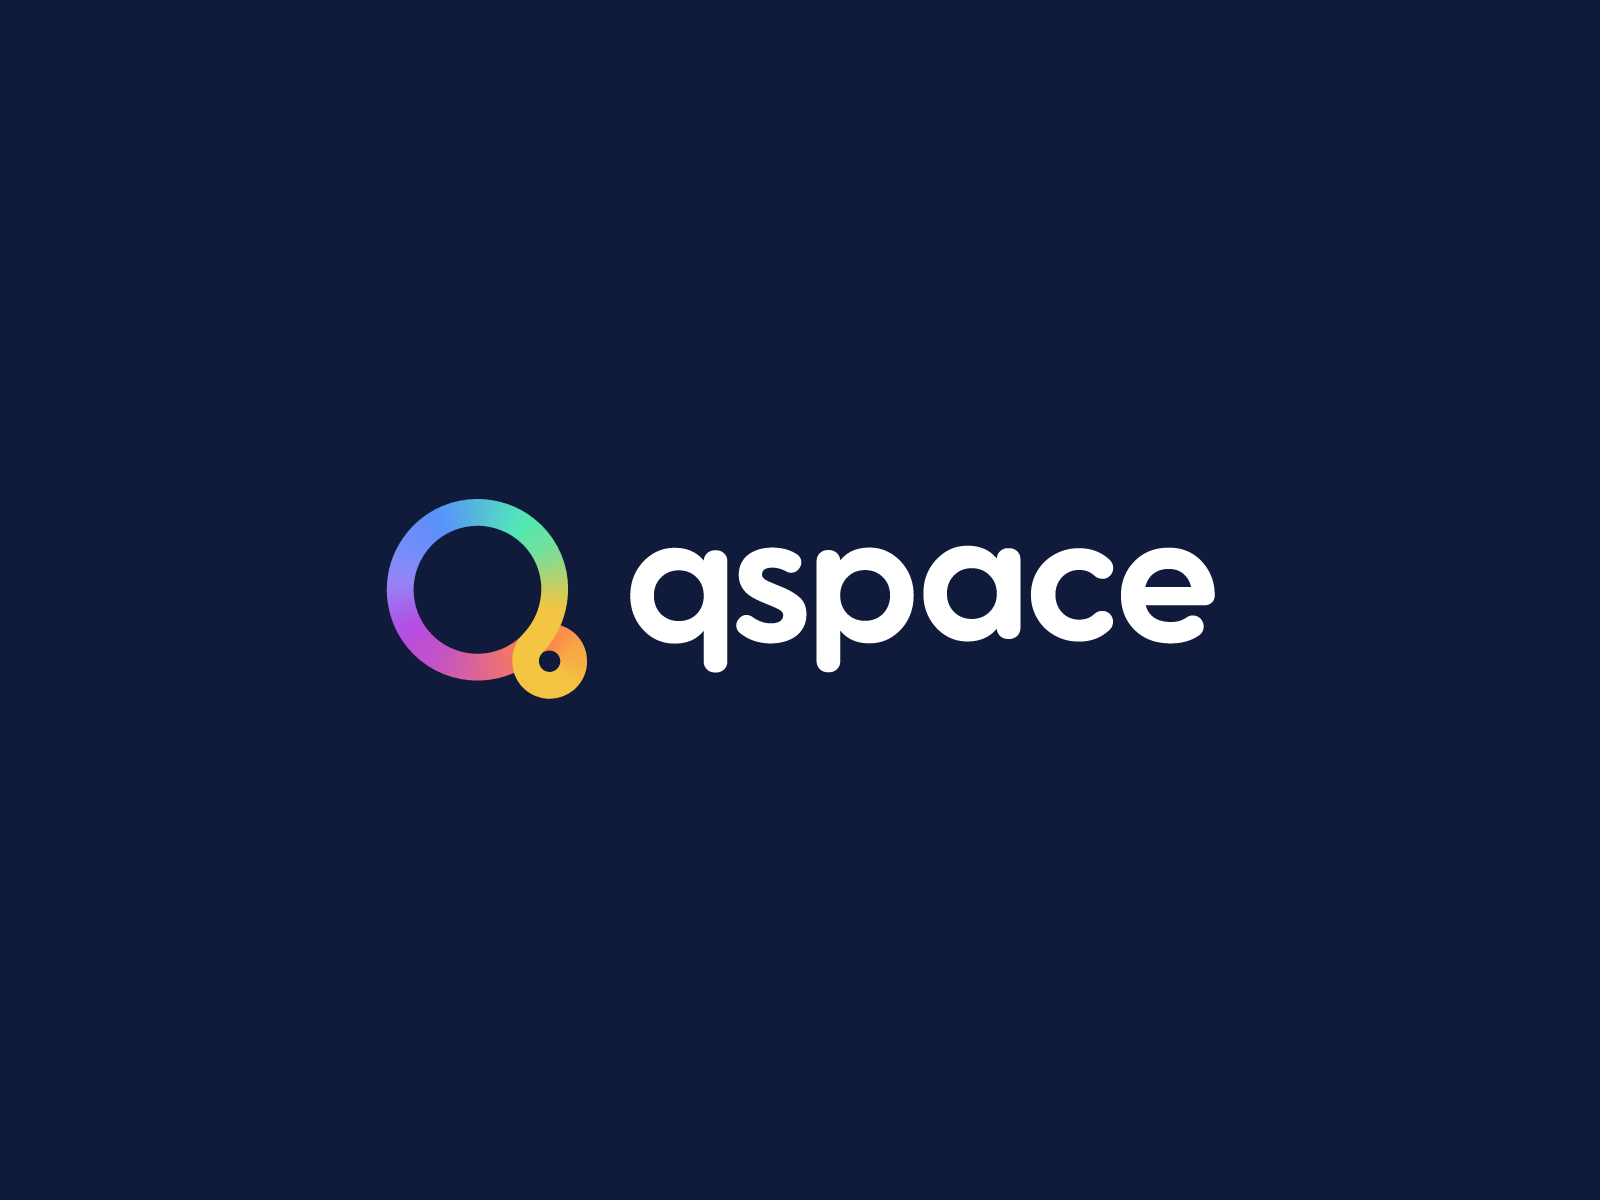 qspace